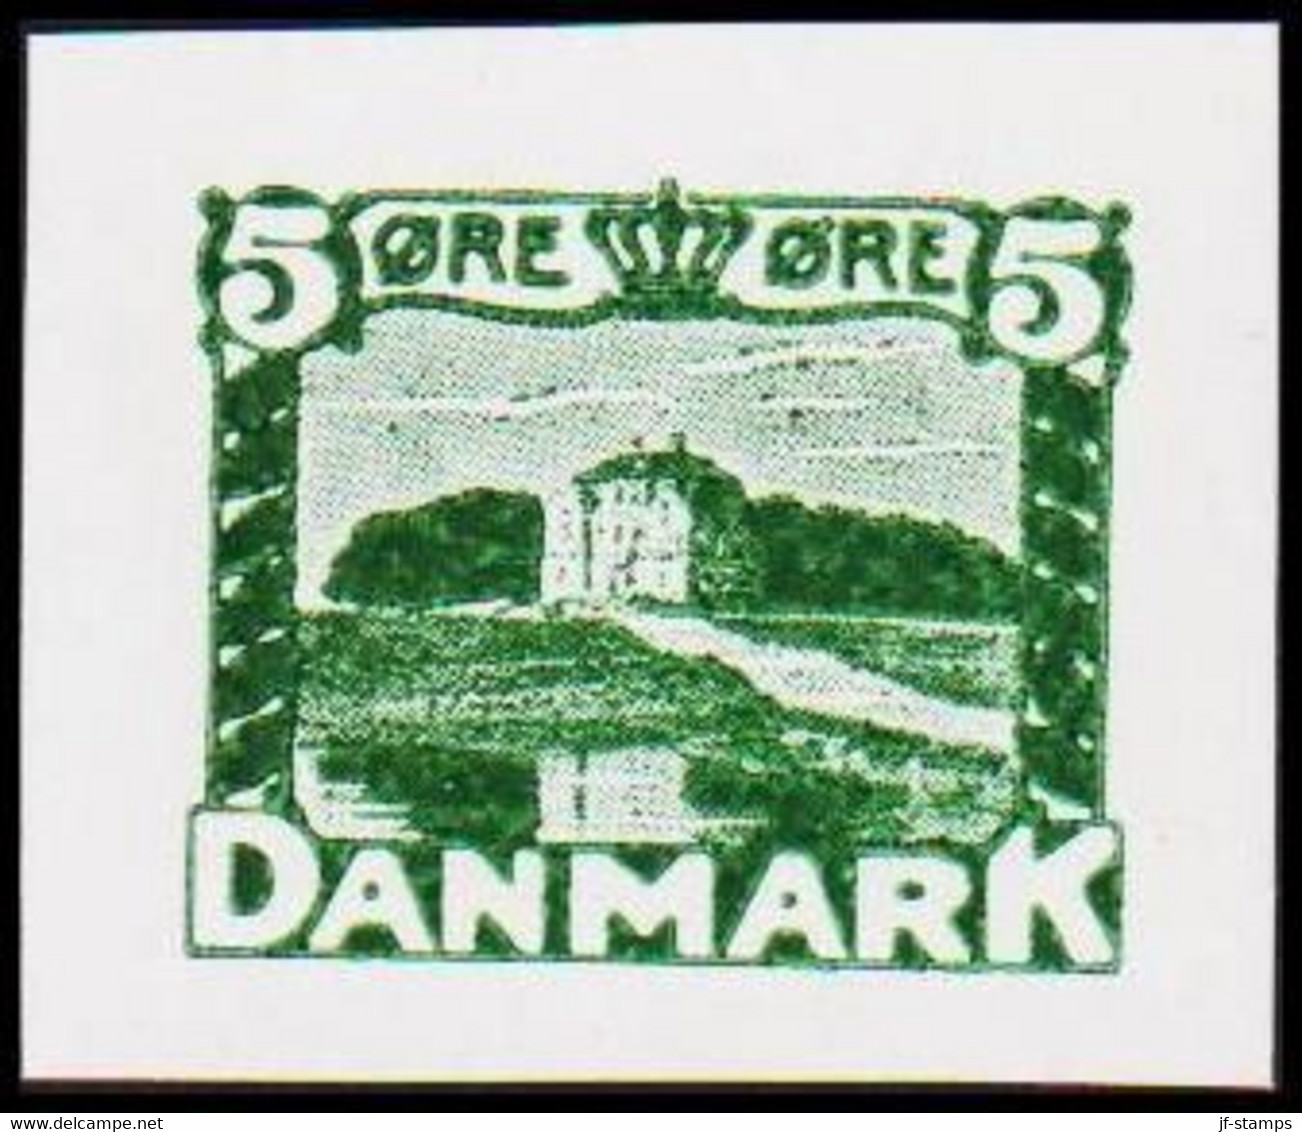 1930. DANMARK. Essay. Eremitageslottet. 5 øre. - JF525165 - Proofs & Reprints